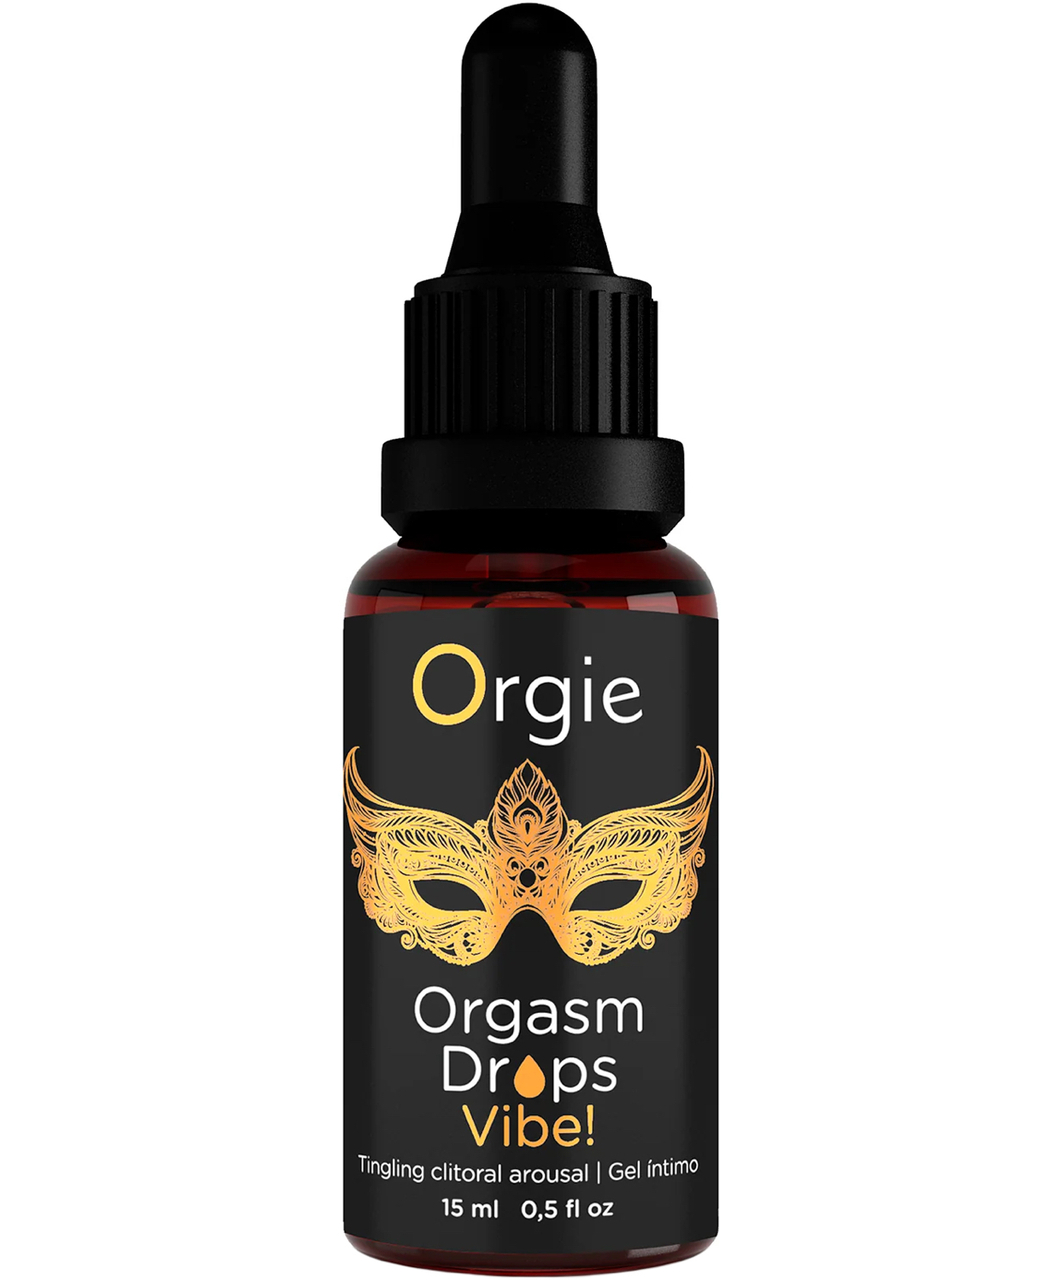 Orgie Orgasm Drops Vibe! clitoris stimulating fluid (15 ml)